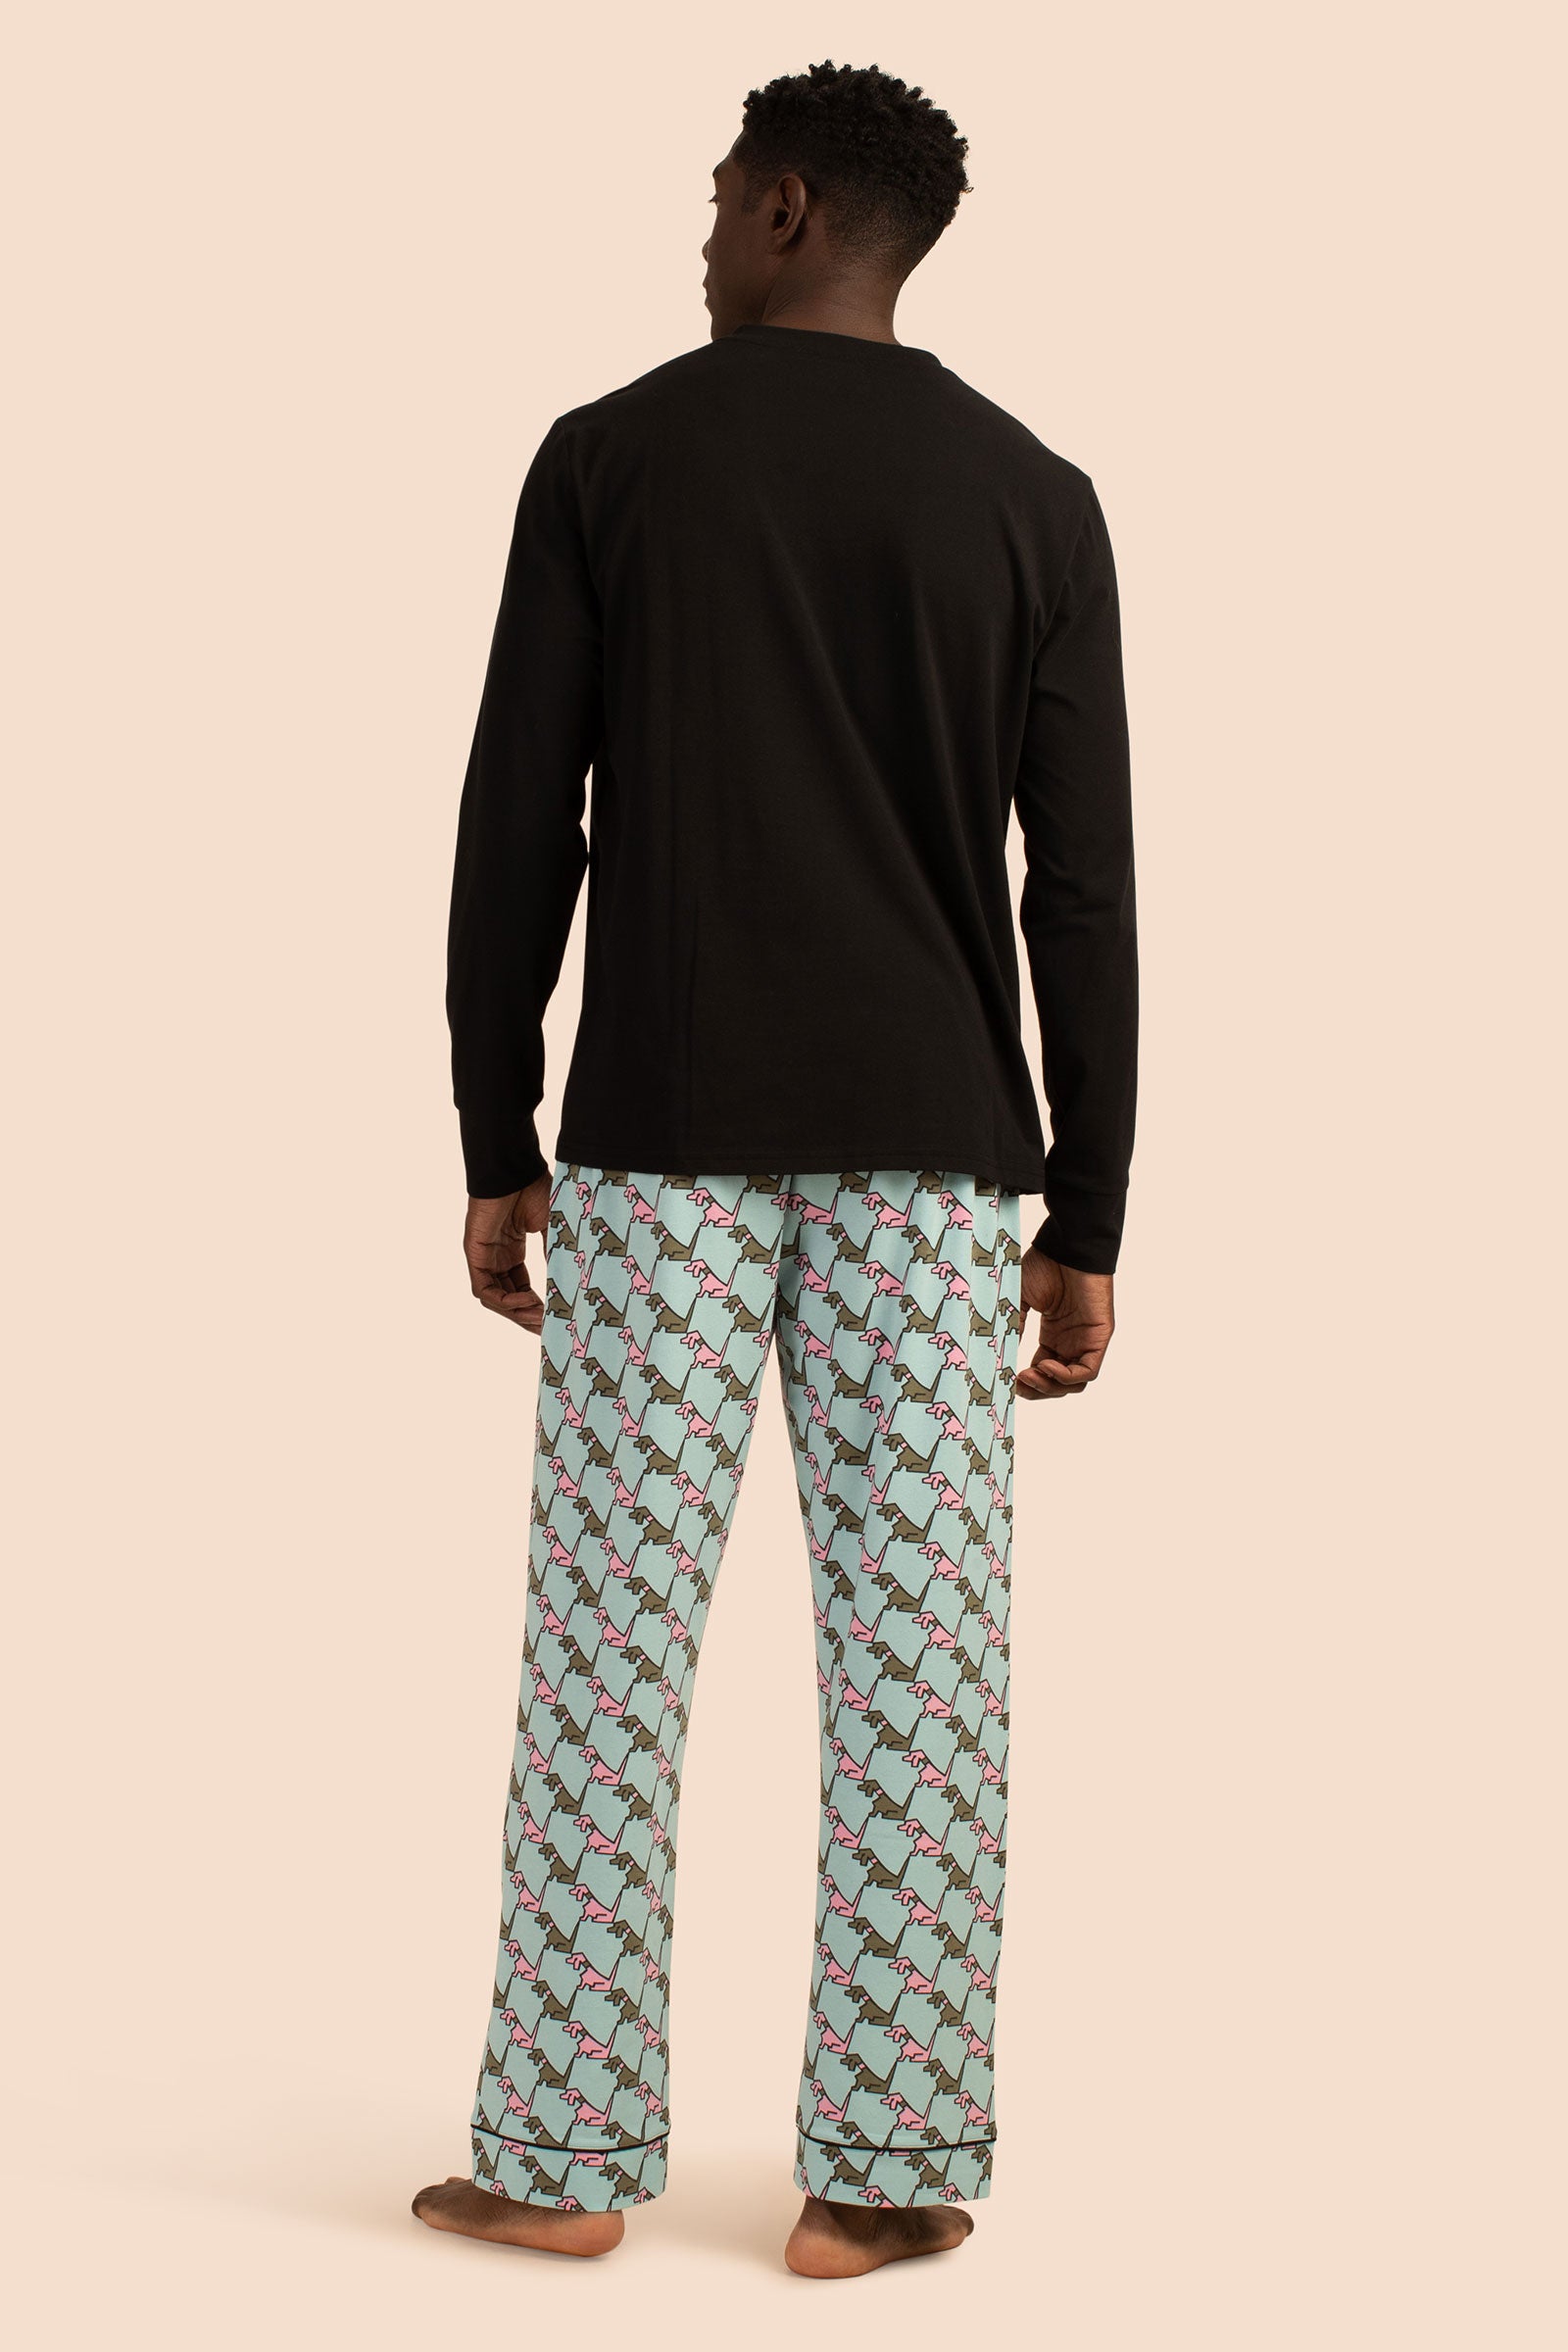 Bedhead Pajamas Men's Trina Turk Henley Set